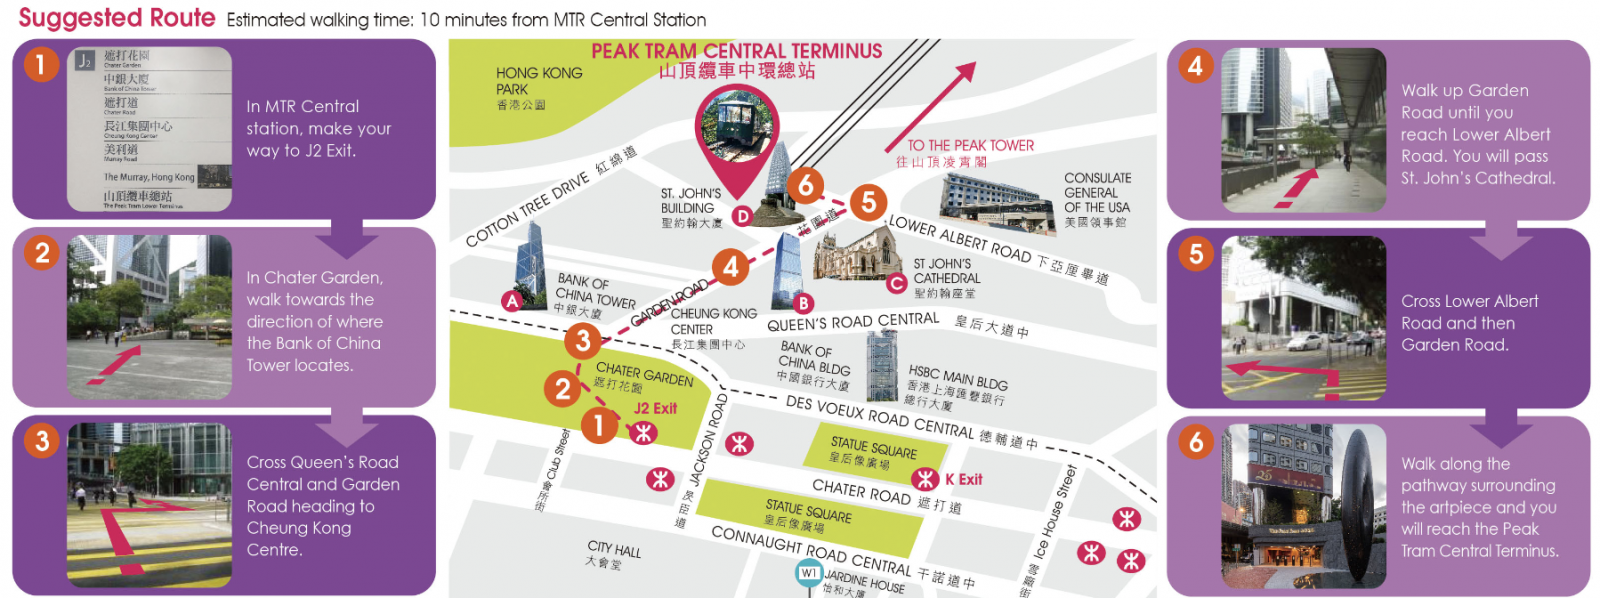 Route for going Peak Tram Central Terminus